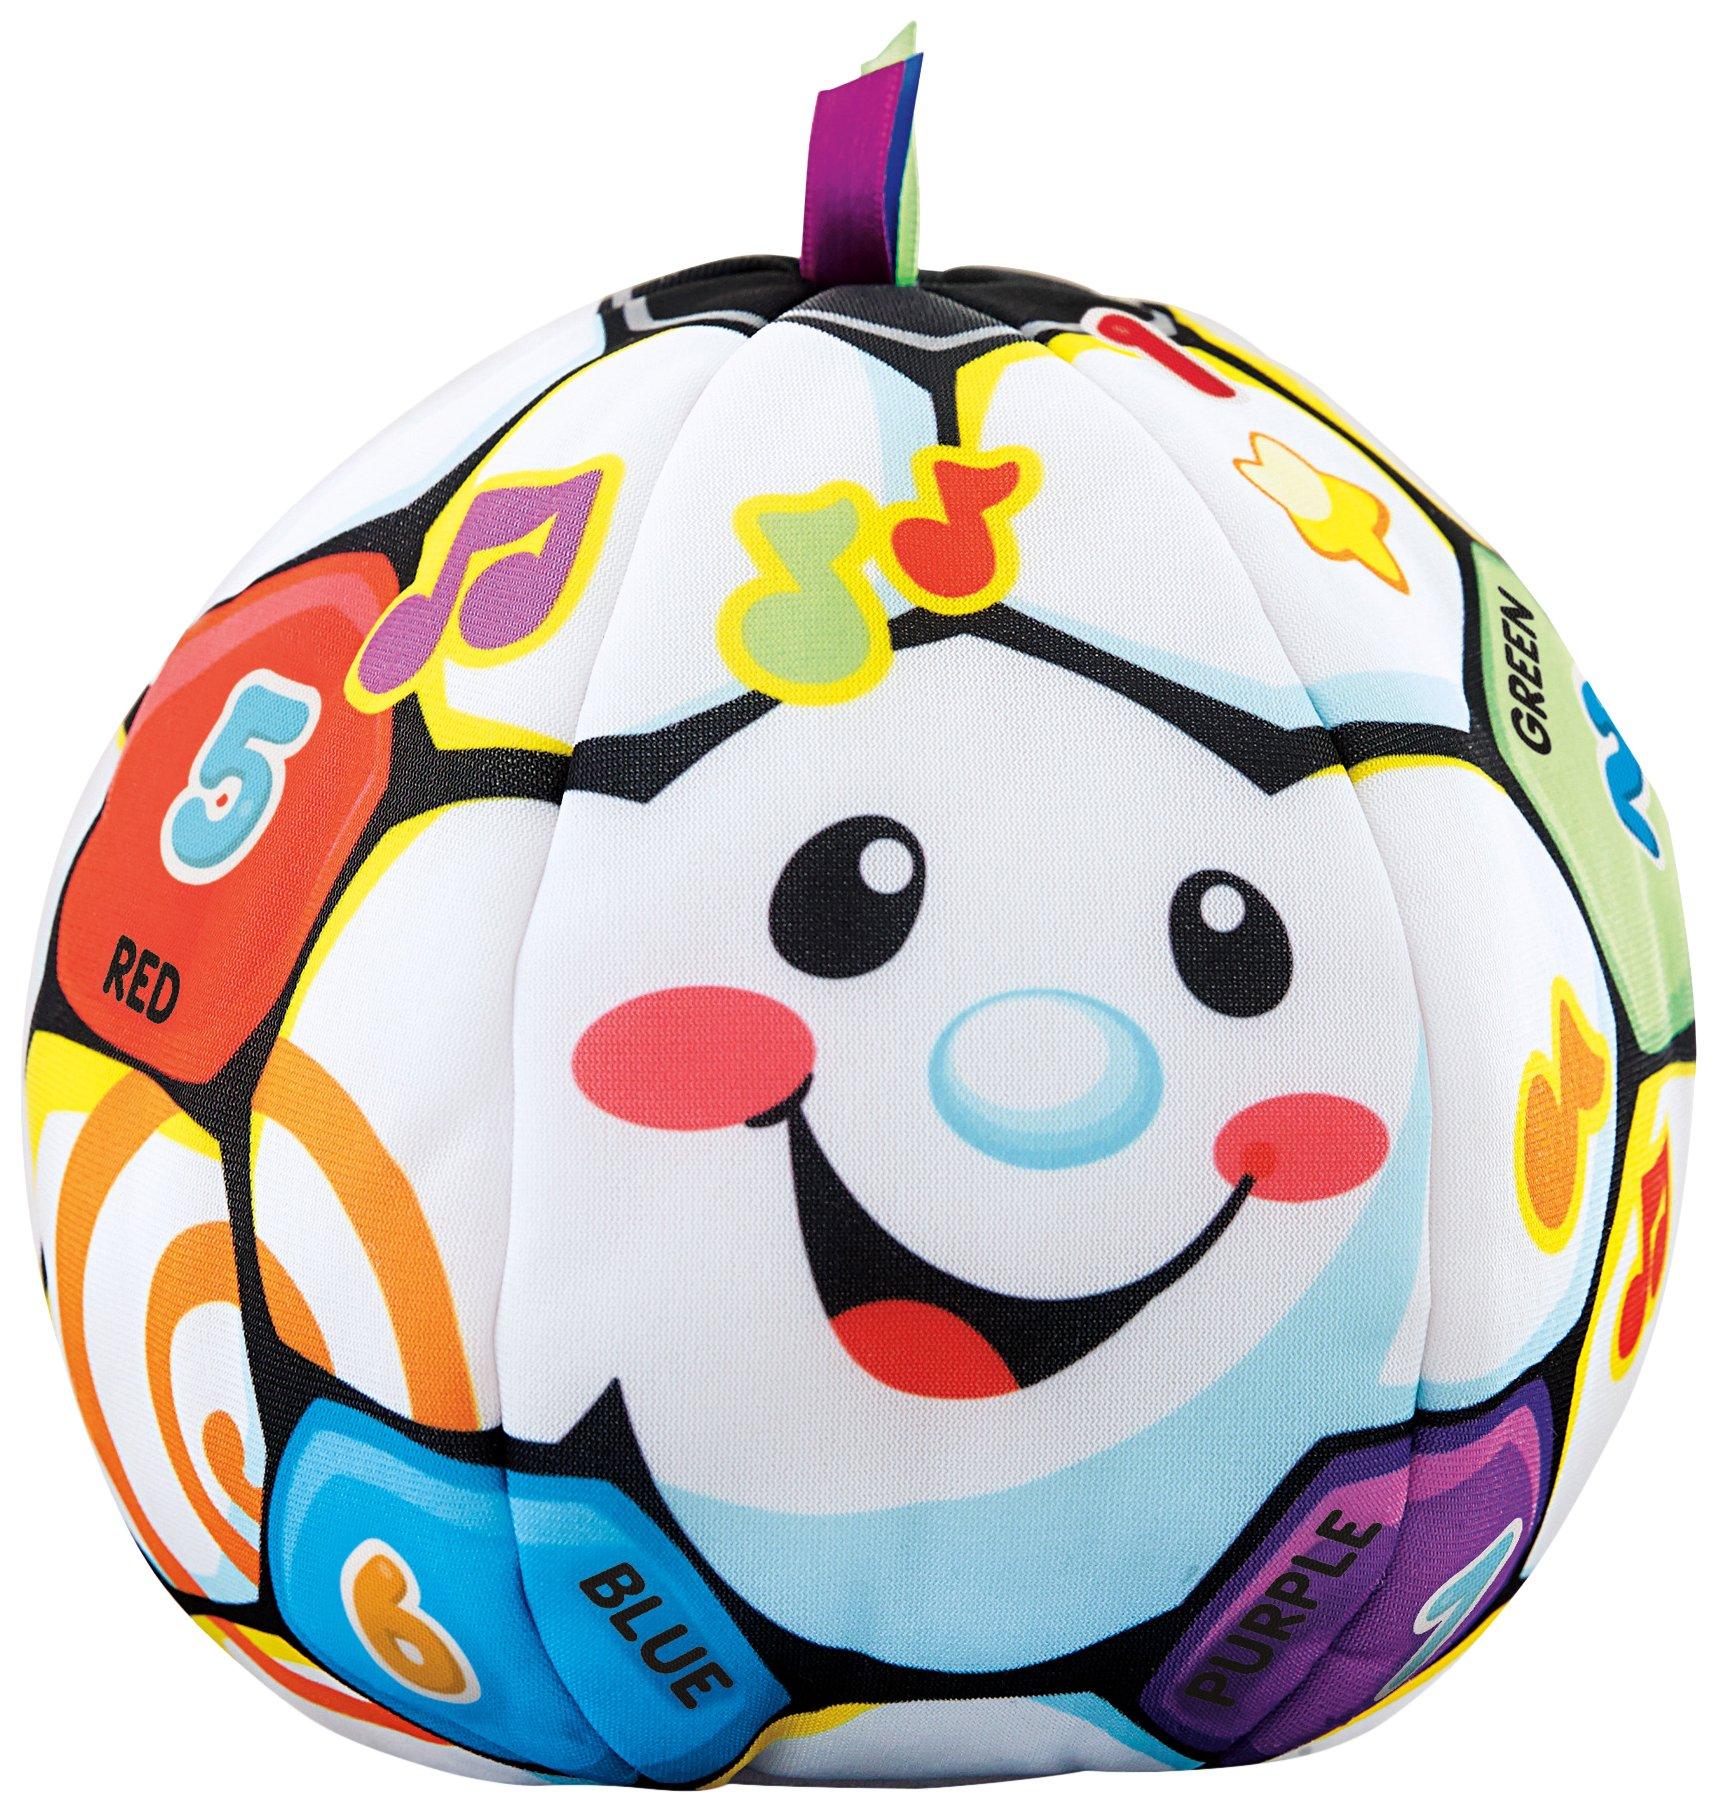 Laugh & Learn Musical Singing Soccer Ball Plush